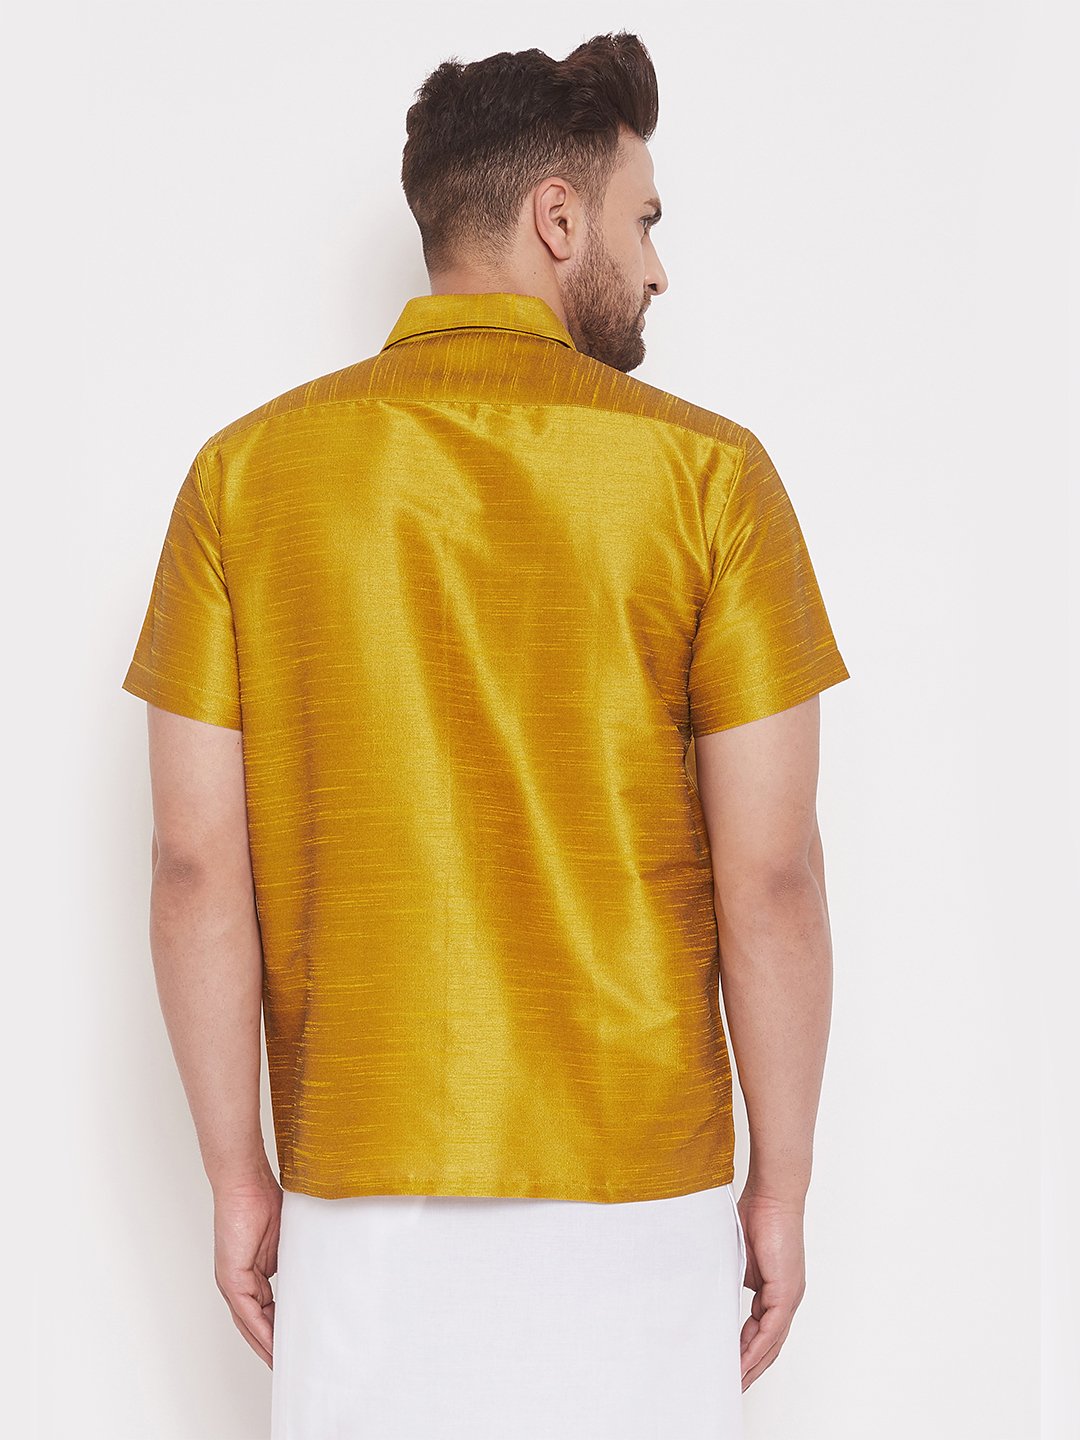 Men's Yellow Cotton Silk Blend Ethnic Shirt - Vastramay